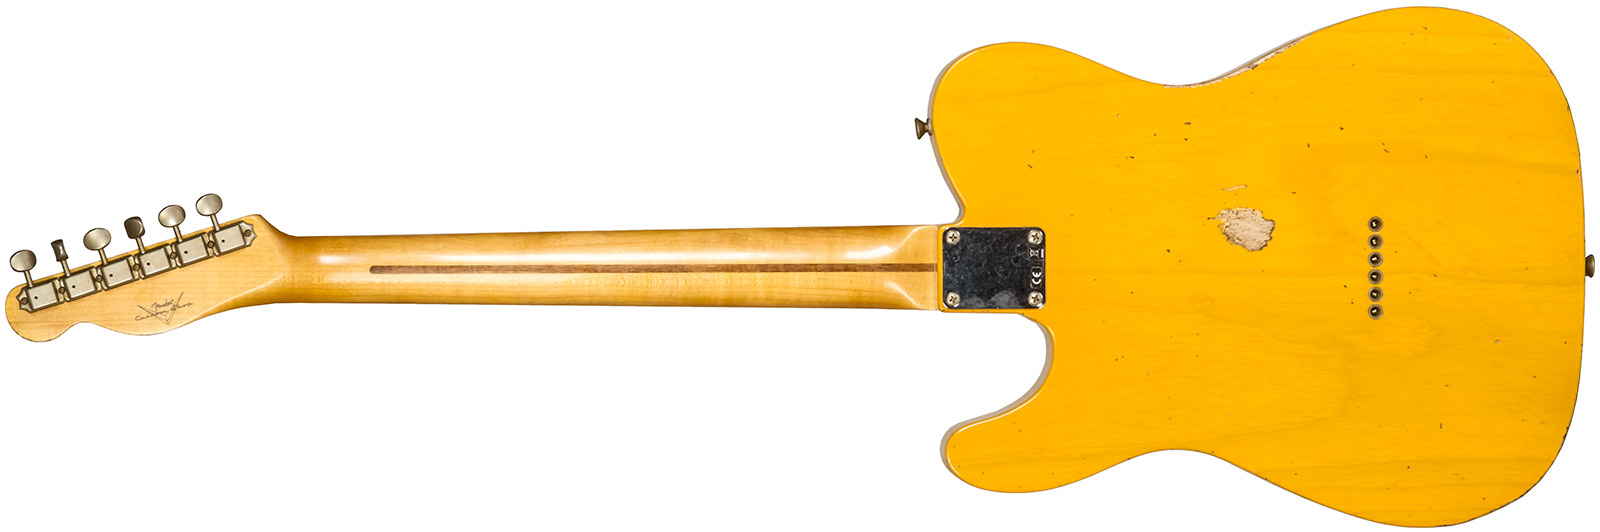 Fender Custom Shop Tele 1952 2s Ht Mn #r135090 - Relic Aged Butterscotch Blonde - Televorm elektrische gitaar - Variation 1